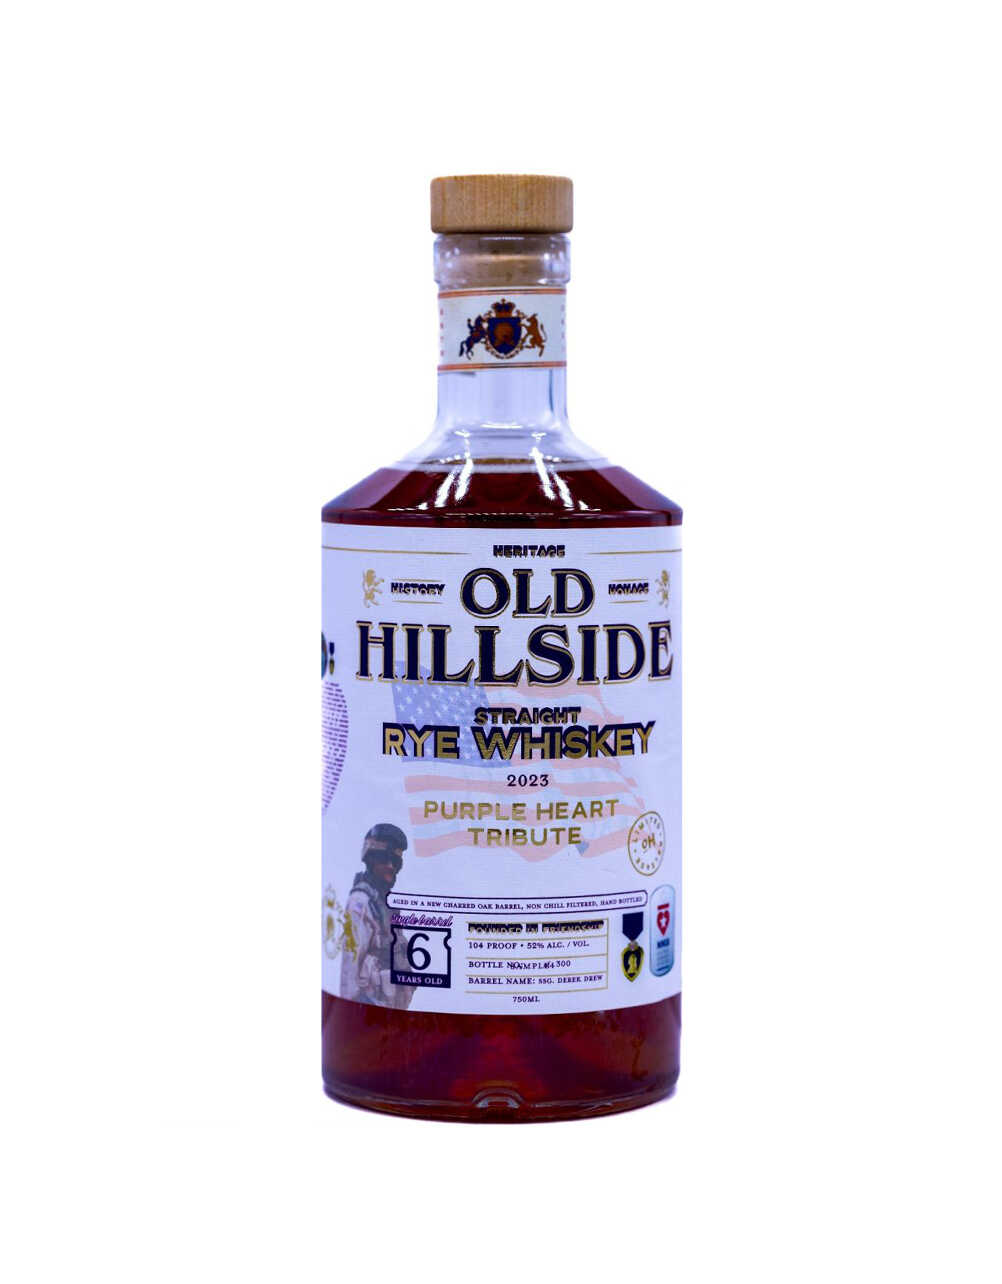 Old Hillside Purple Heart Tribute 6 Year Old Straight Rye Whiskey 2023